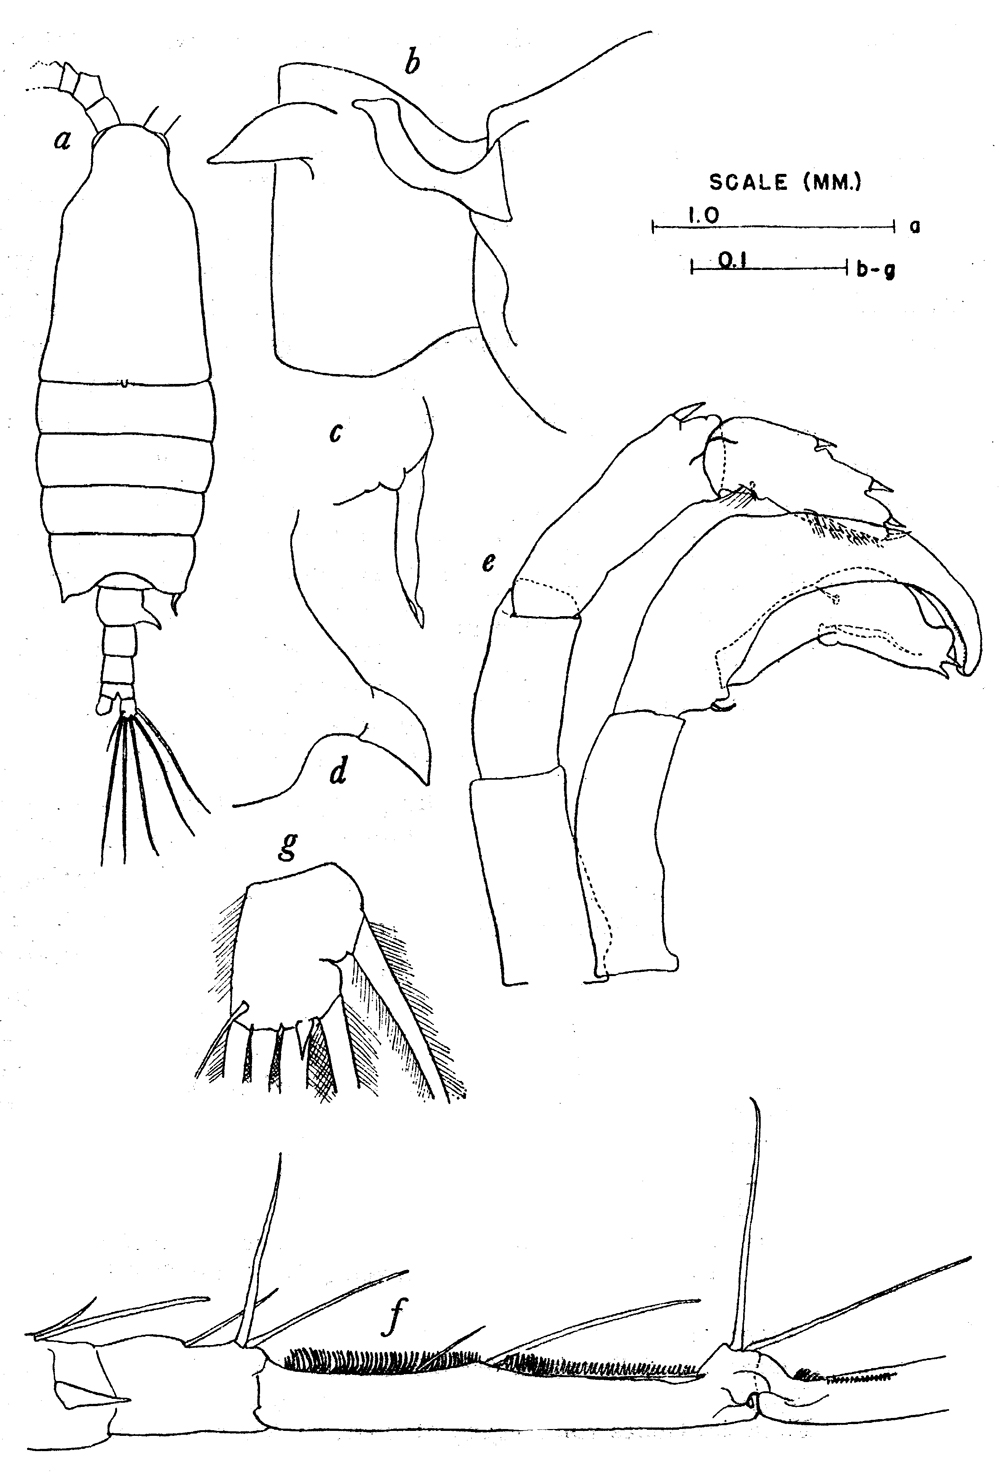 Espce Candacia paenelongimana - Planche 2 de figures morphologiques